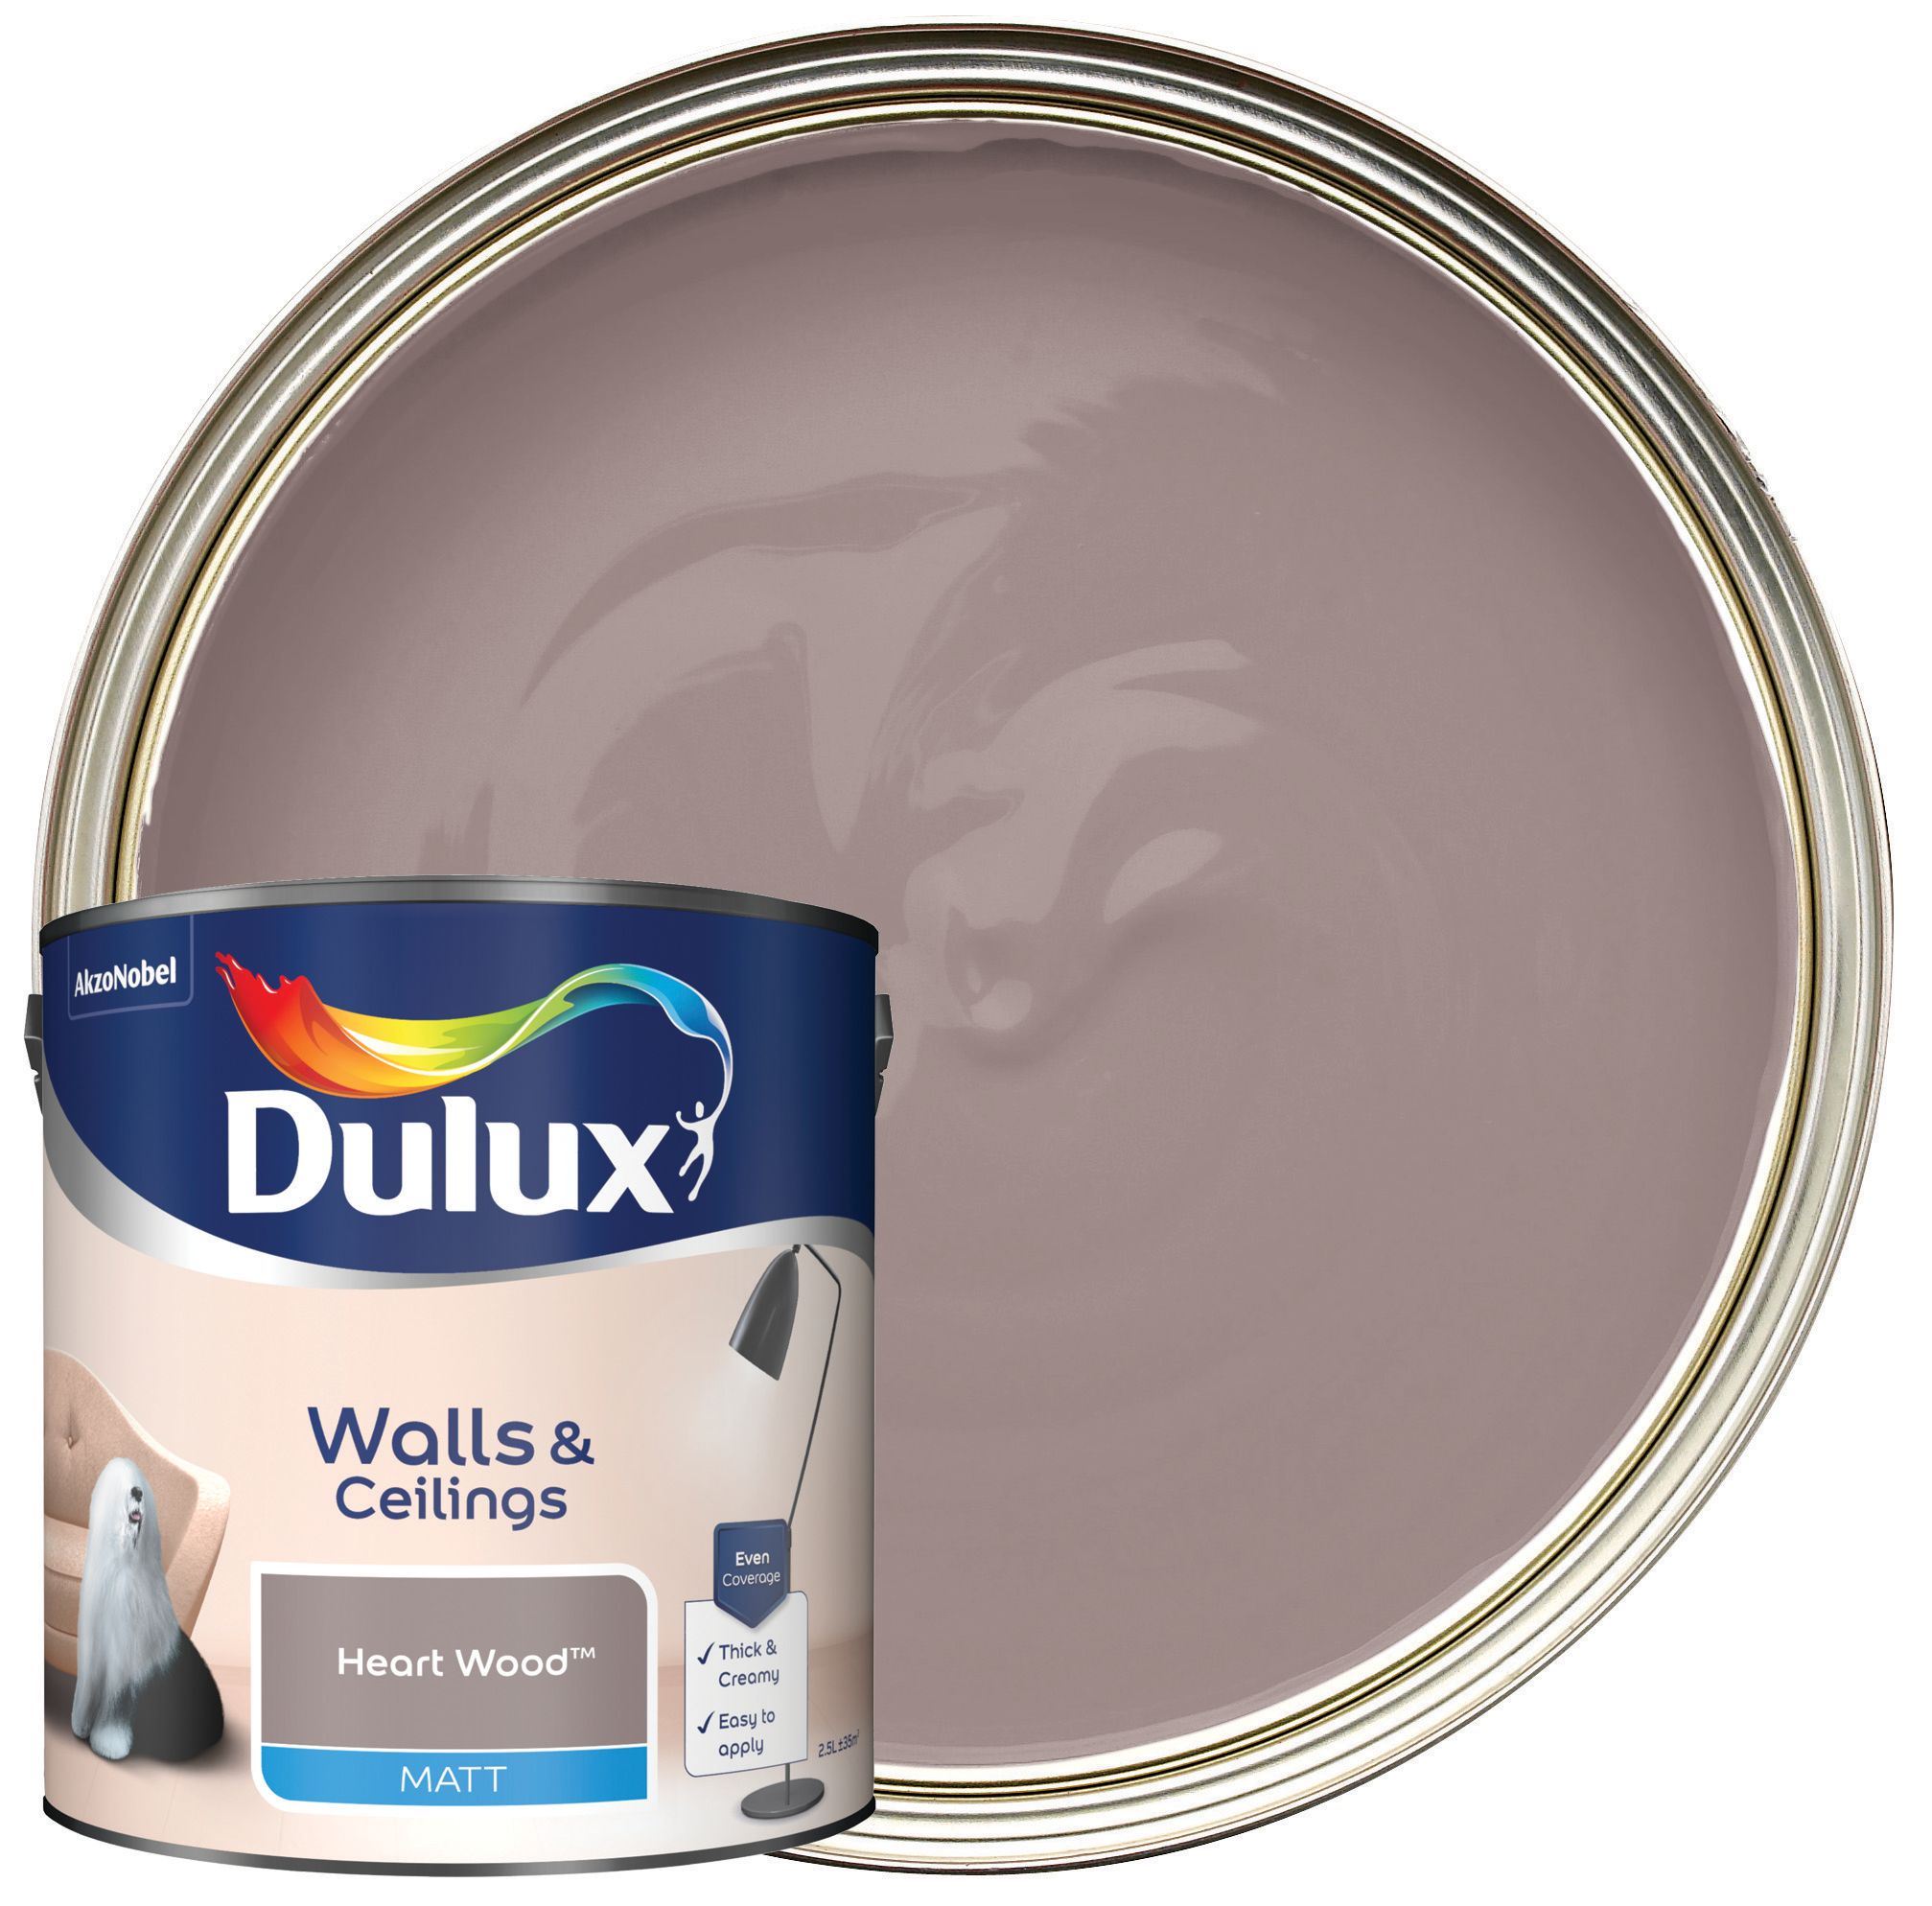 Dulux Matt Emulsion Paint - Heart Wood - 2.5L